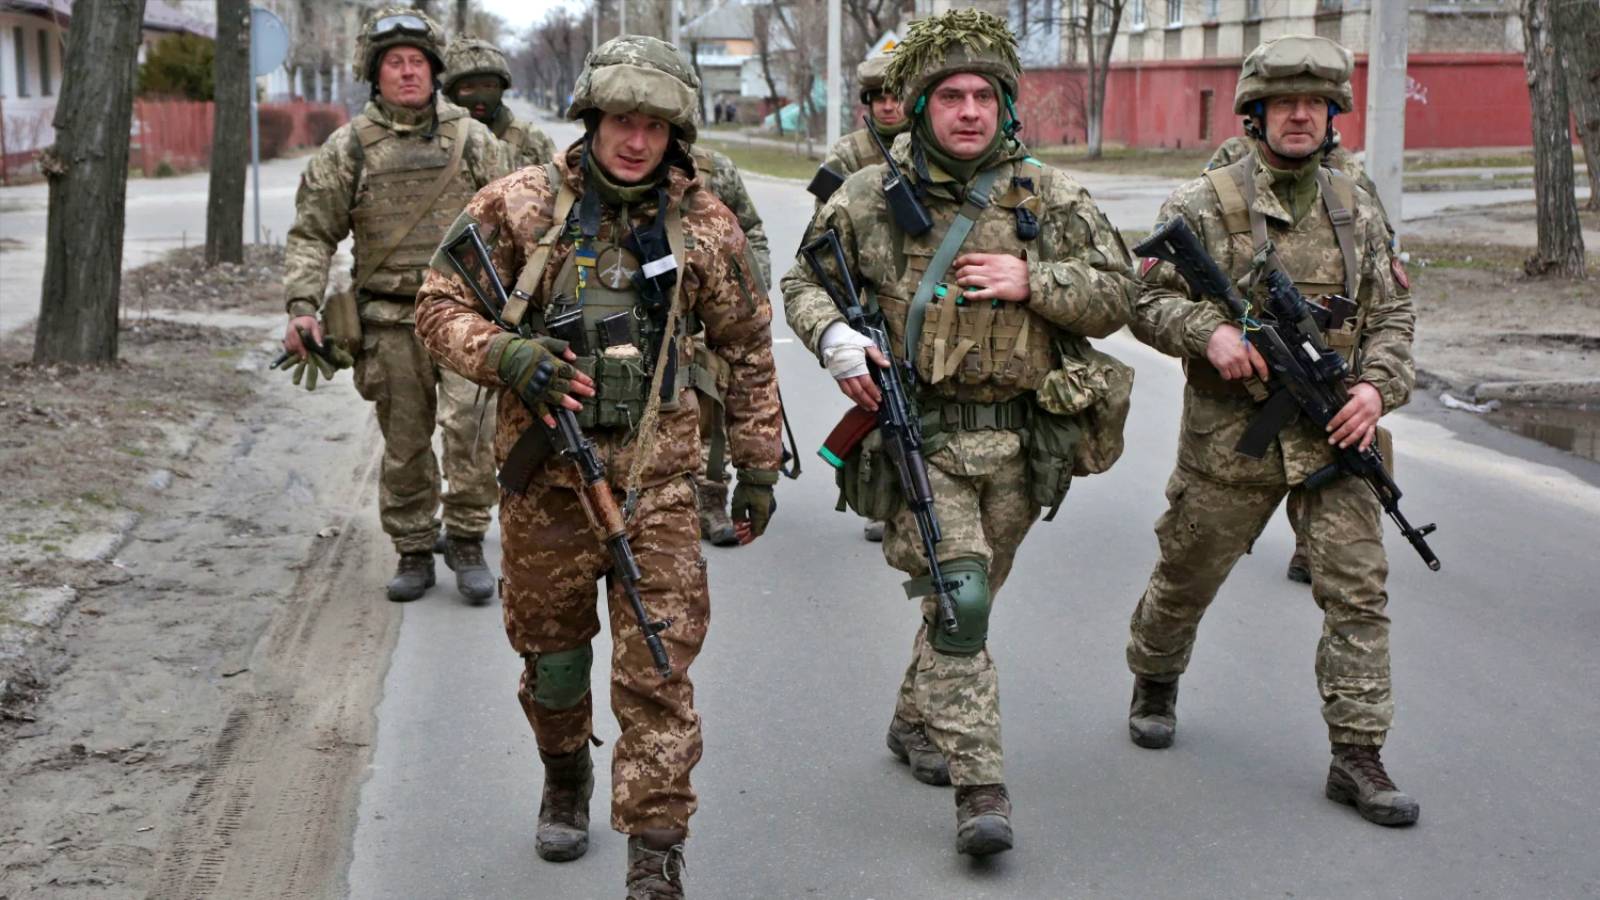 VIDEO Battleground nära Kiev Presenterade bilder Ukraina